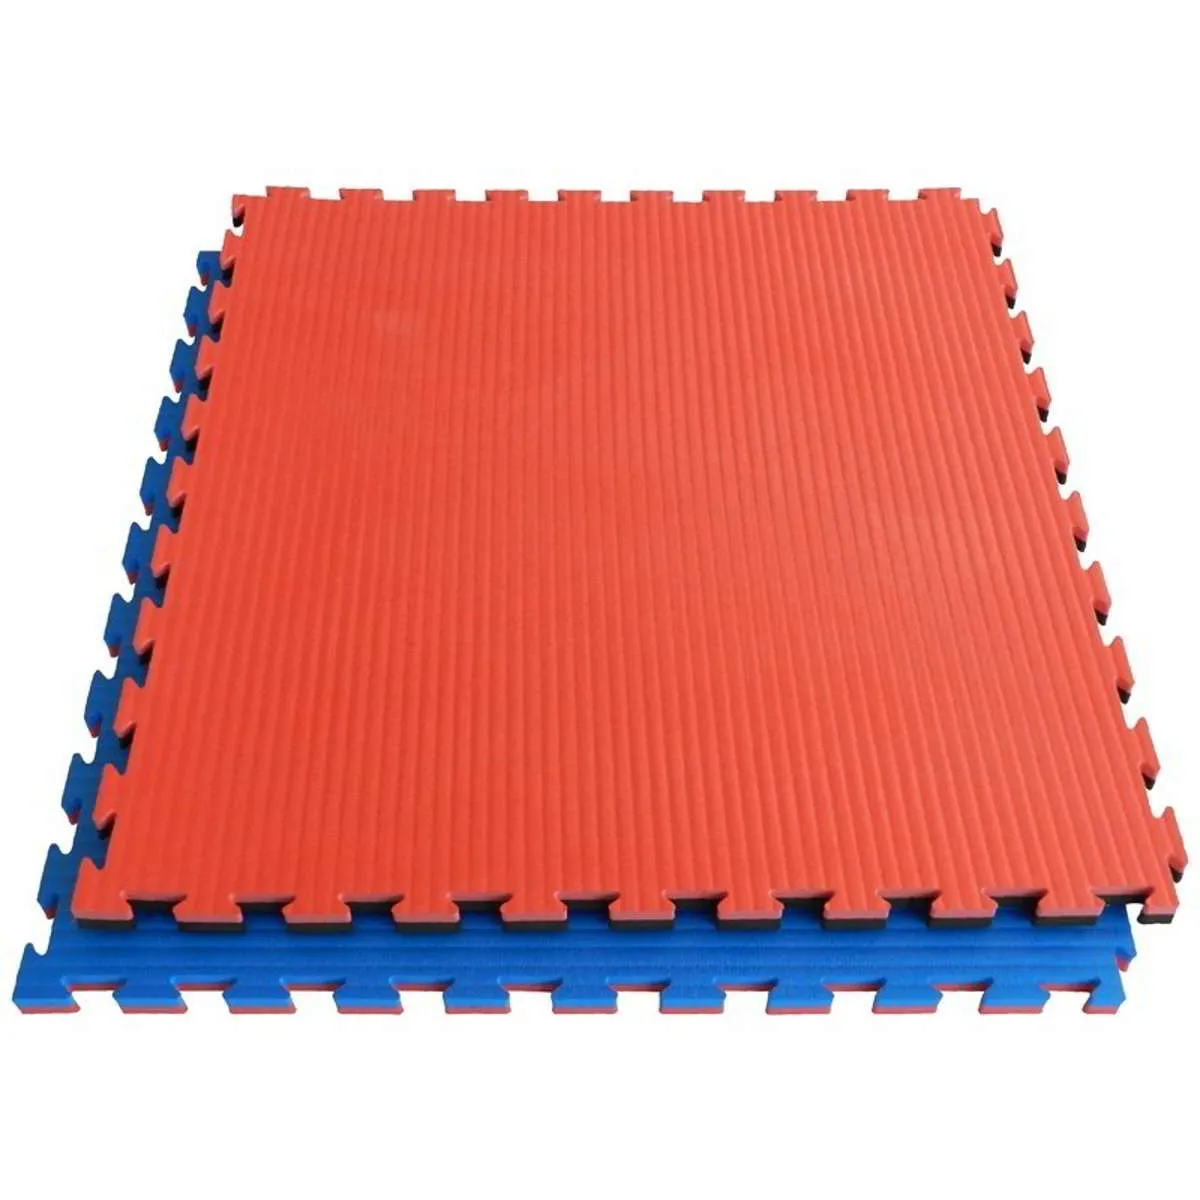 Tatami mat red/blue 100 cm x 100 cm x 3 cm JJ30J